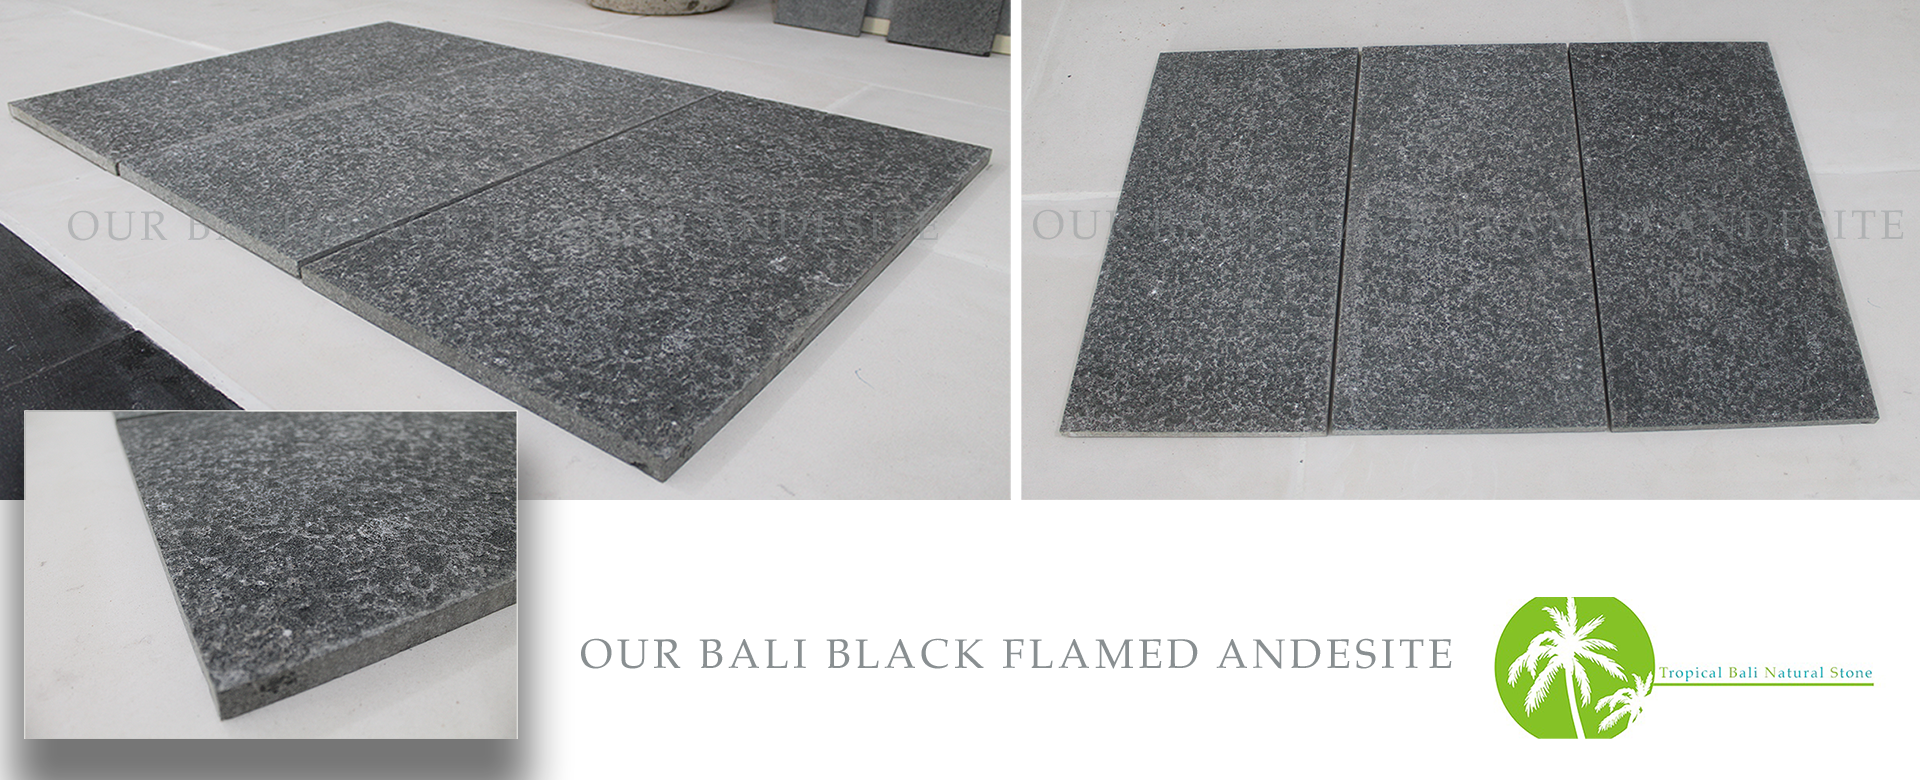 Bali Black Andesite Stone from www.tropicalbalinaturalstone.com